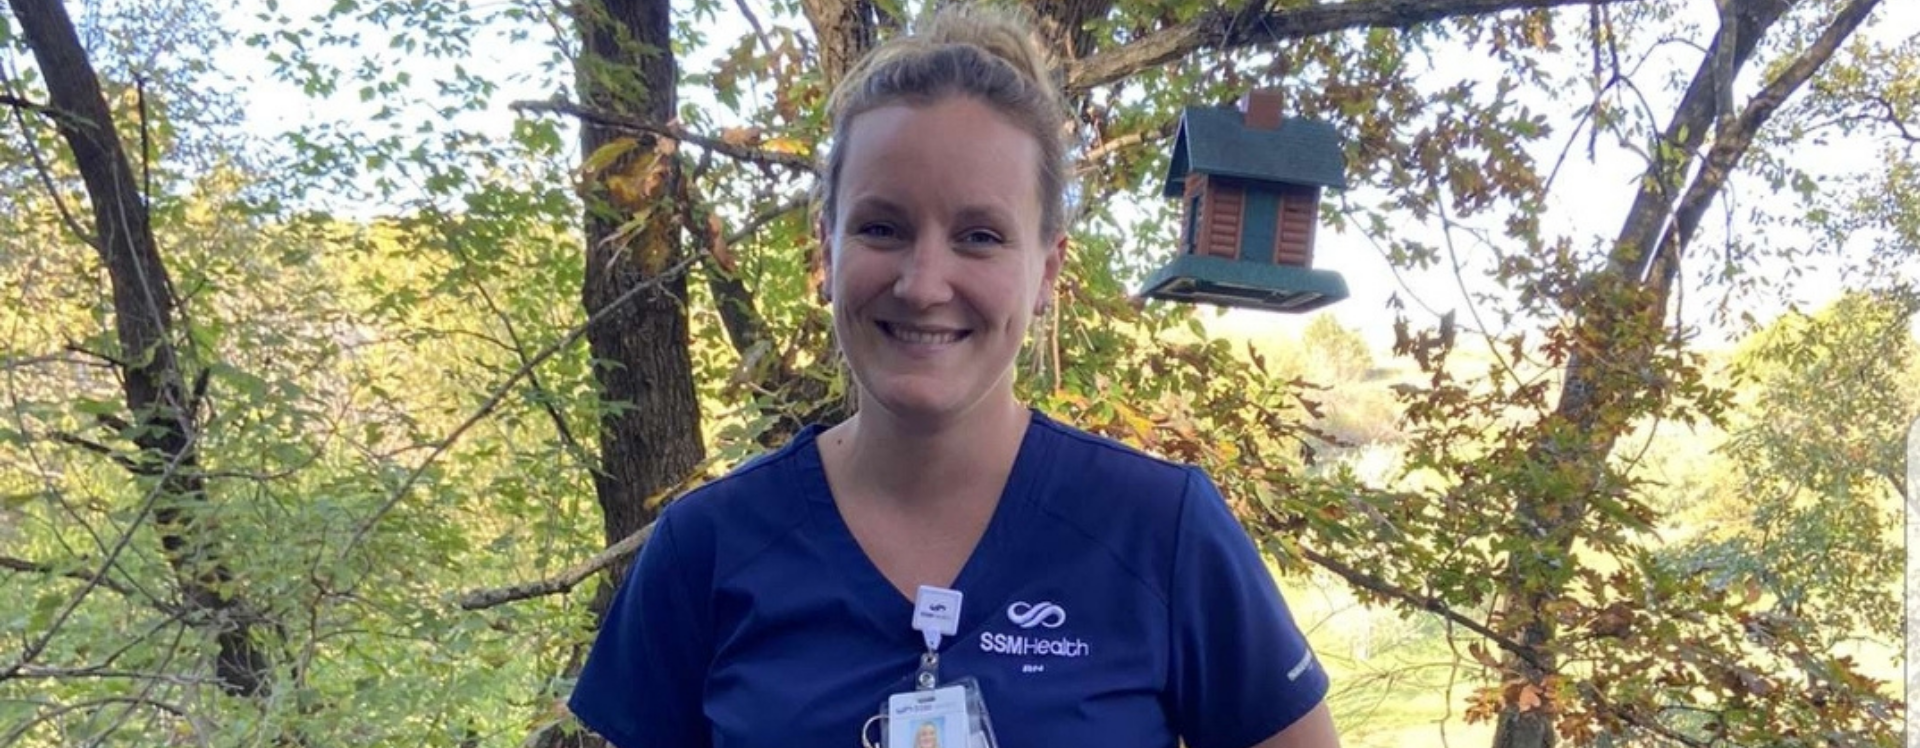 jeanette williams in nursing uniform